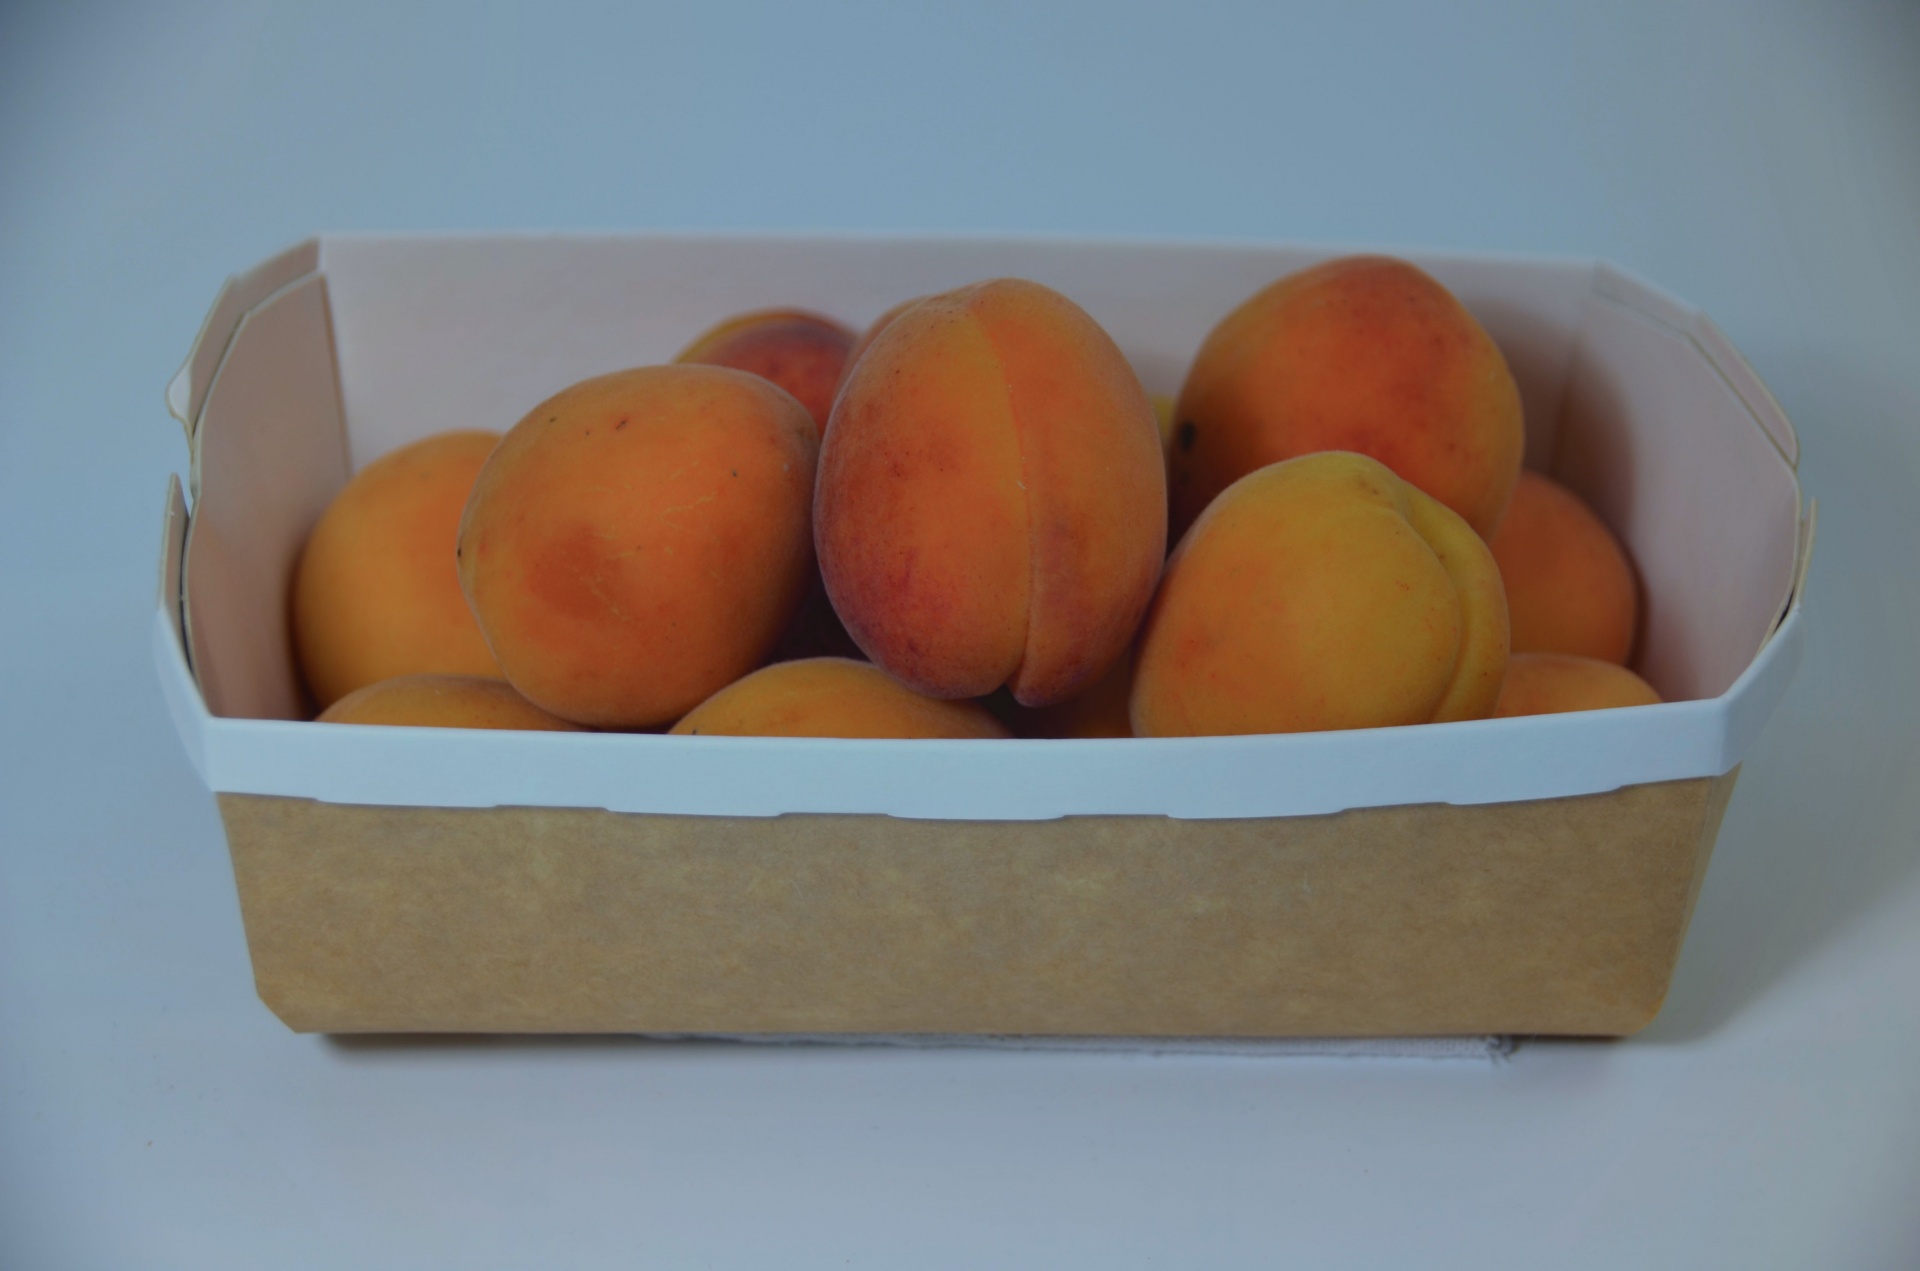 apricots fruit nature free photo